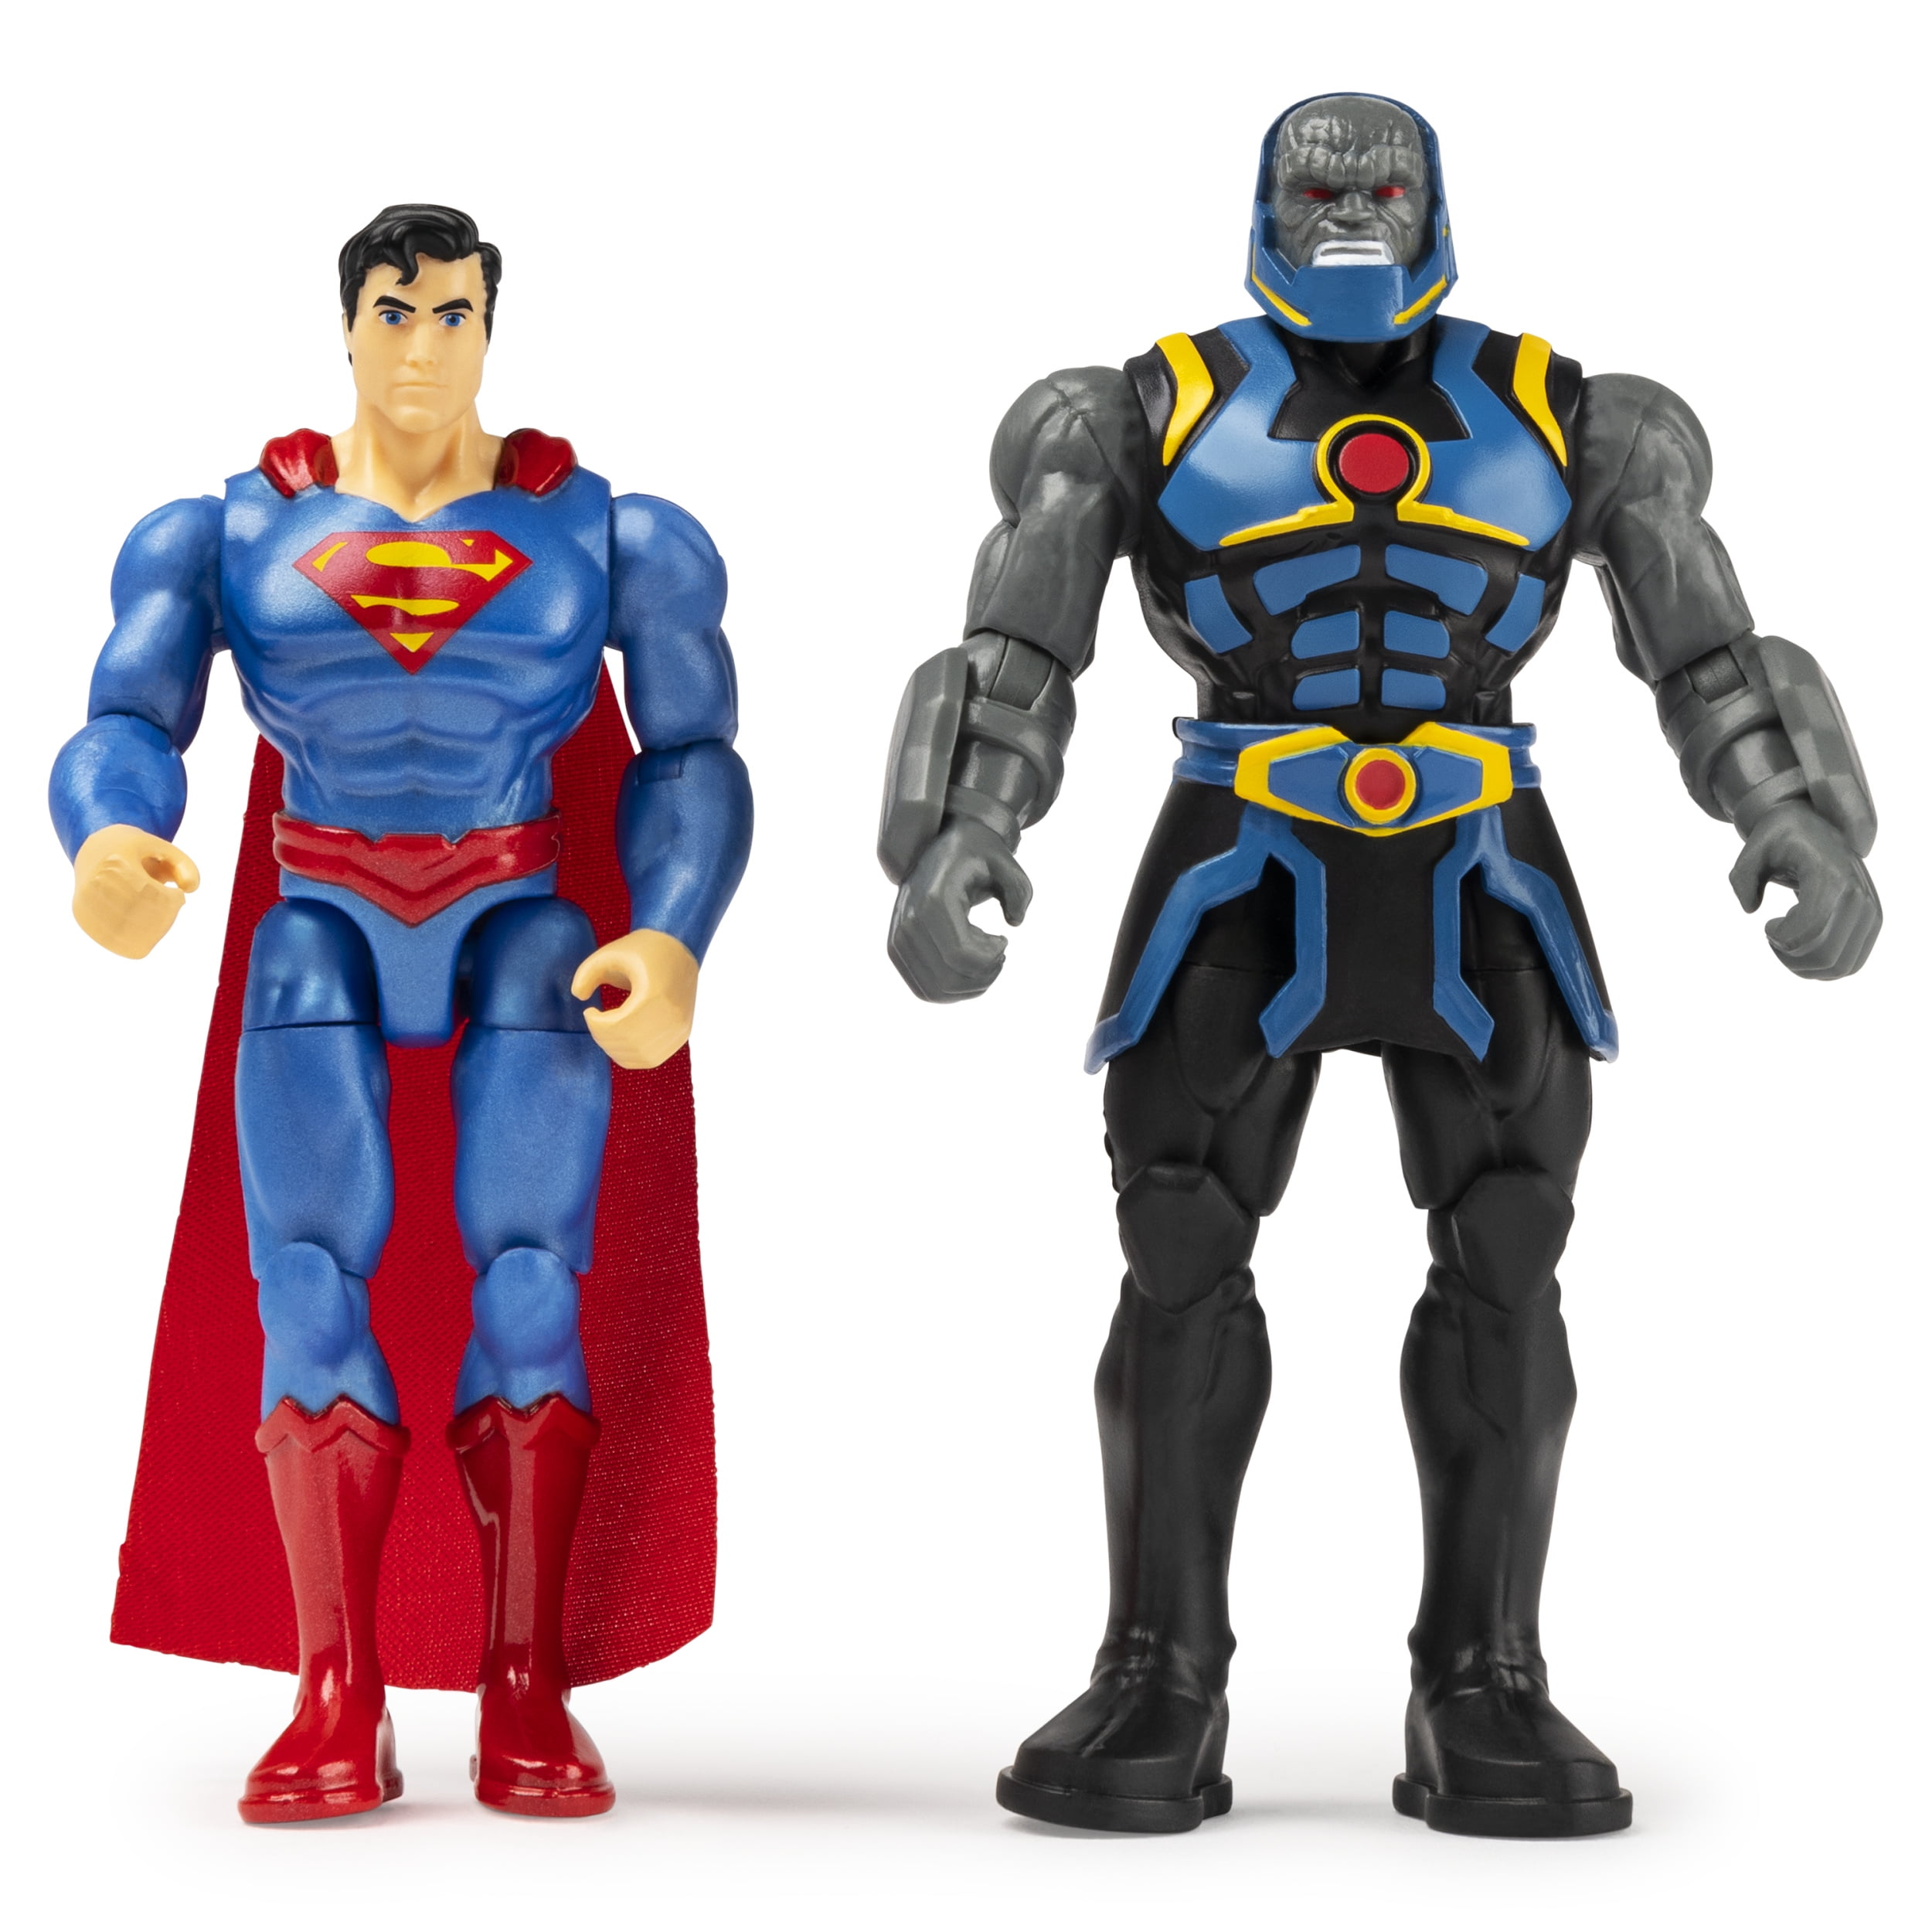 Fisher-Price Imaginext DC Super Friends Darkseid Superman Pack 